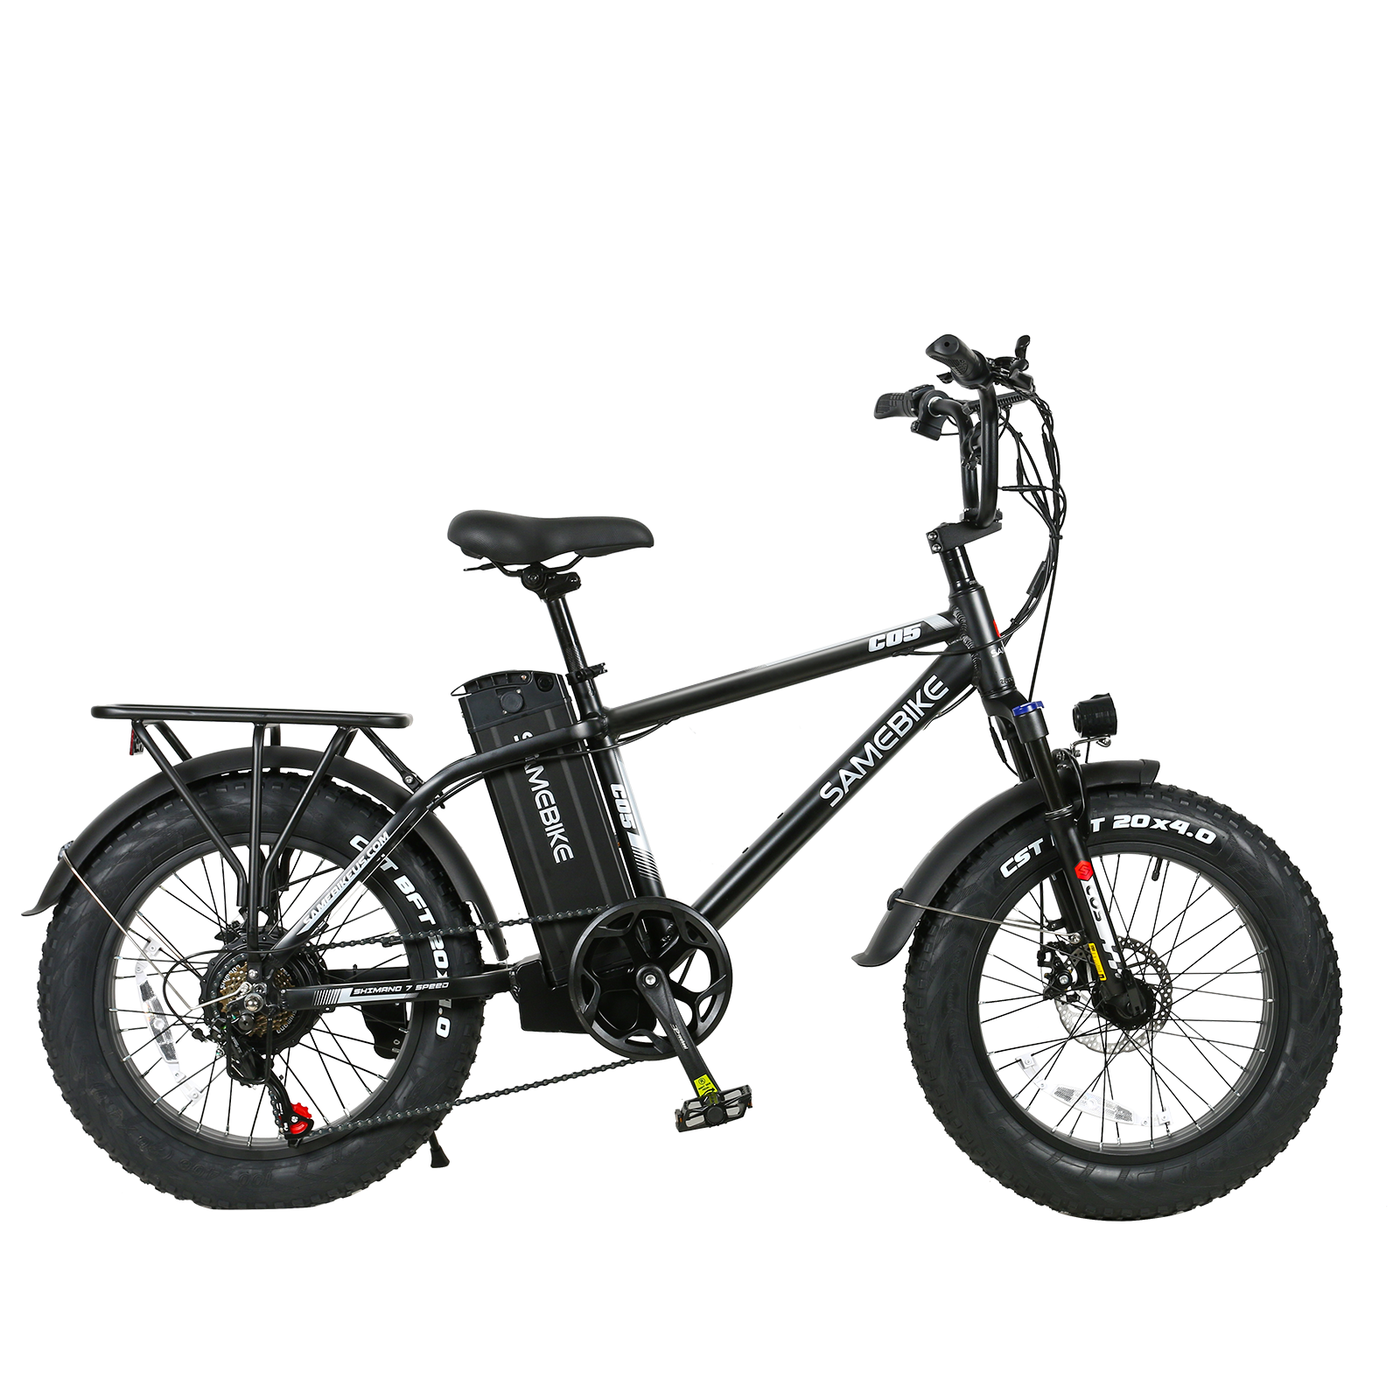 XWC05 Off-Road Electric Bike